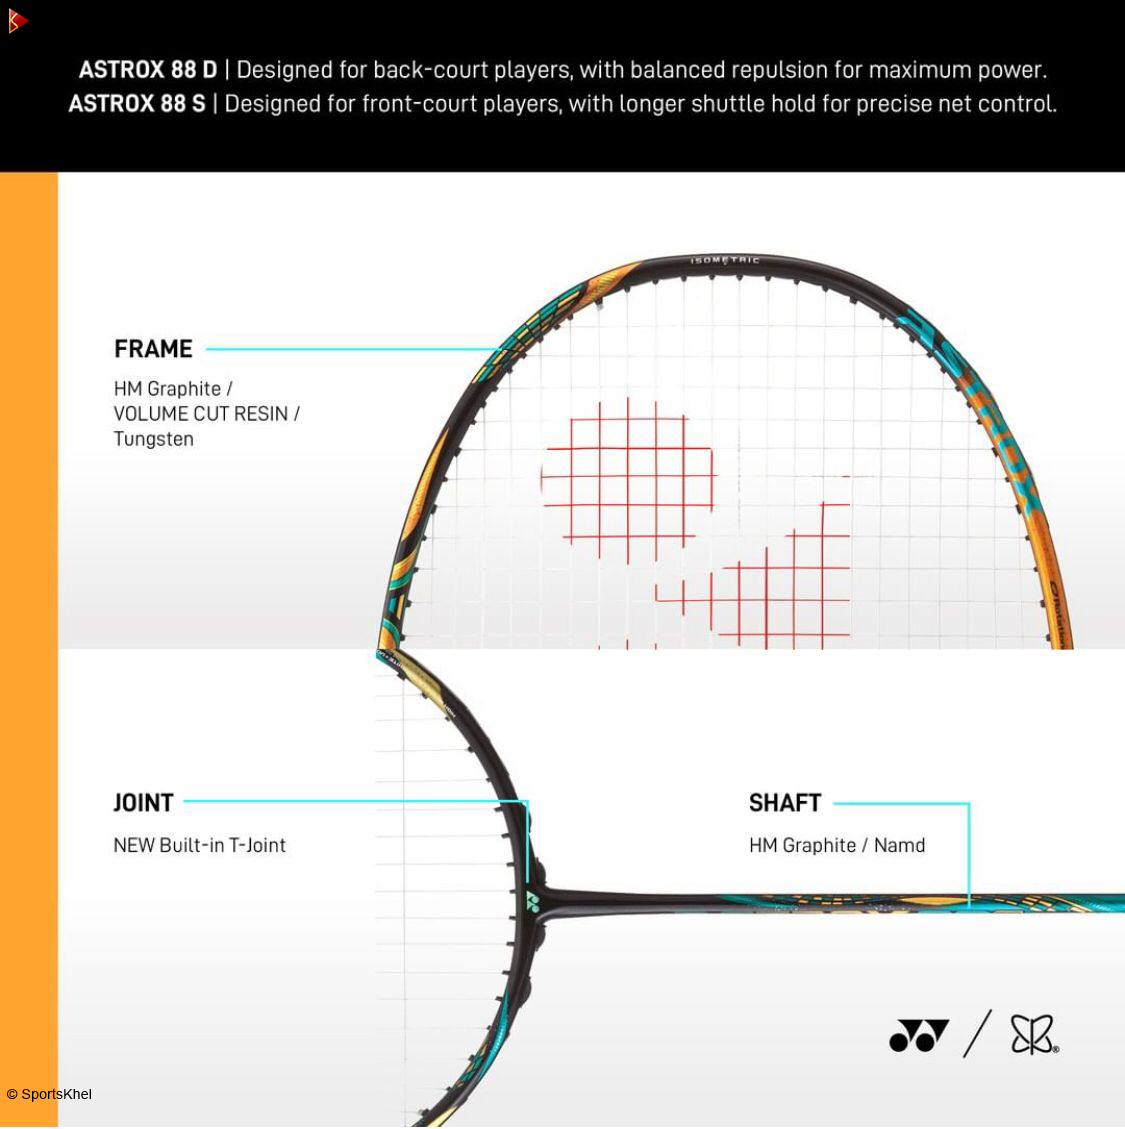 Yonex Astrox 88D Pro Badminton Racket Features